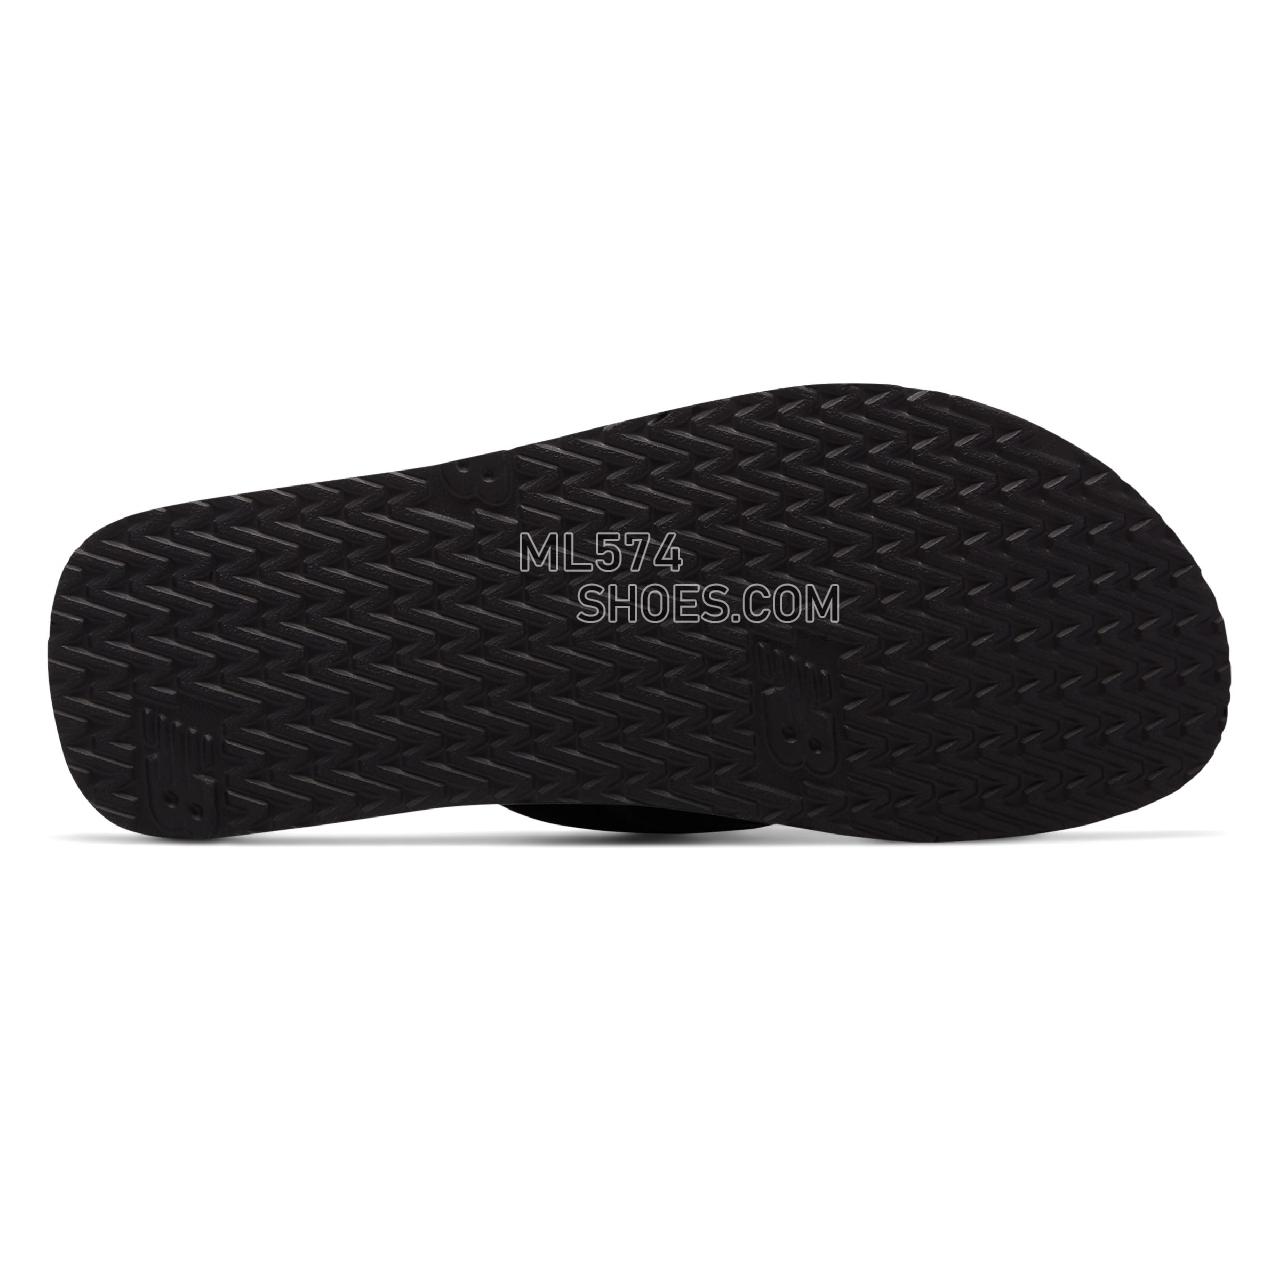 New Balance Brighton Thong - Men's 6079 - Sandals Black - M6079BK